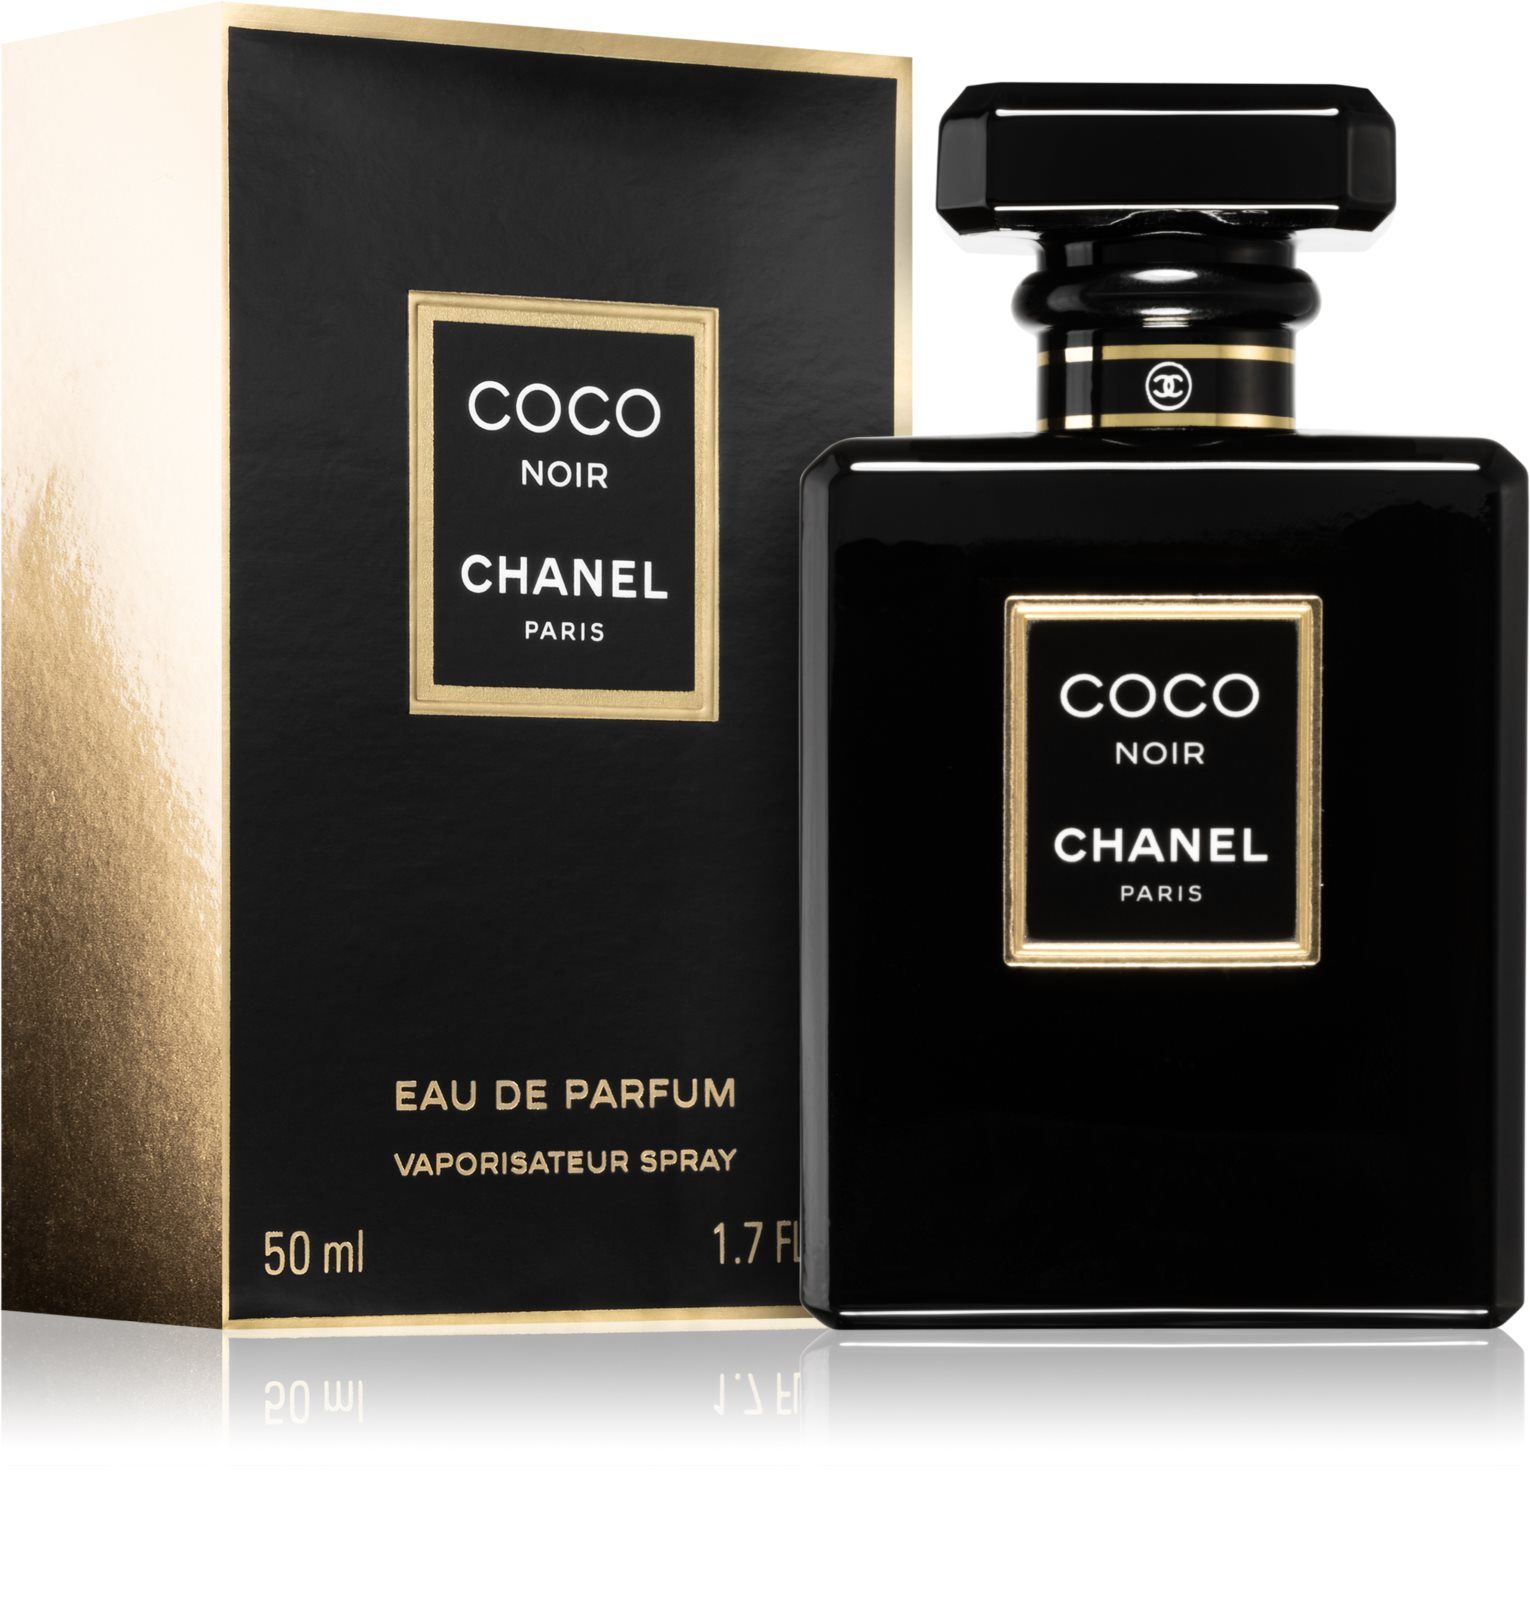 Духи коко отзывы. Coco Noir Chanel 35 ml. Chanel Coco 50 мл. Chanel Coco Noir 100 ml. Аромат Chanel Coco Noir.